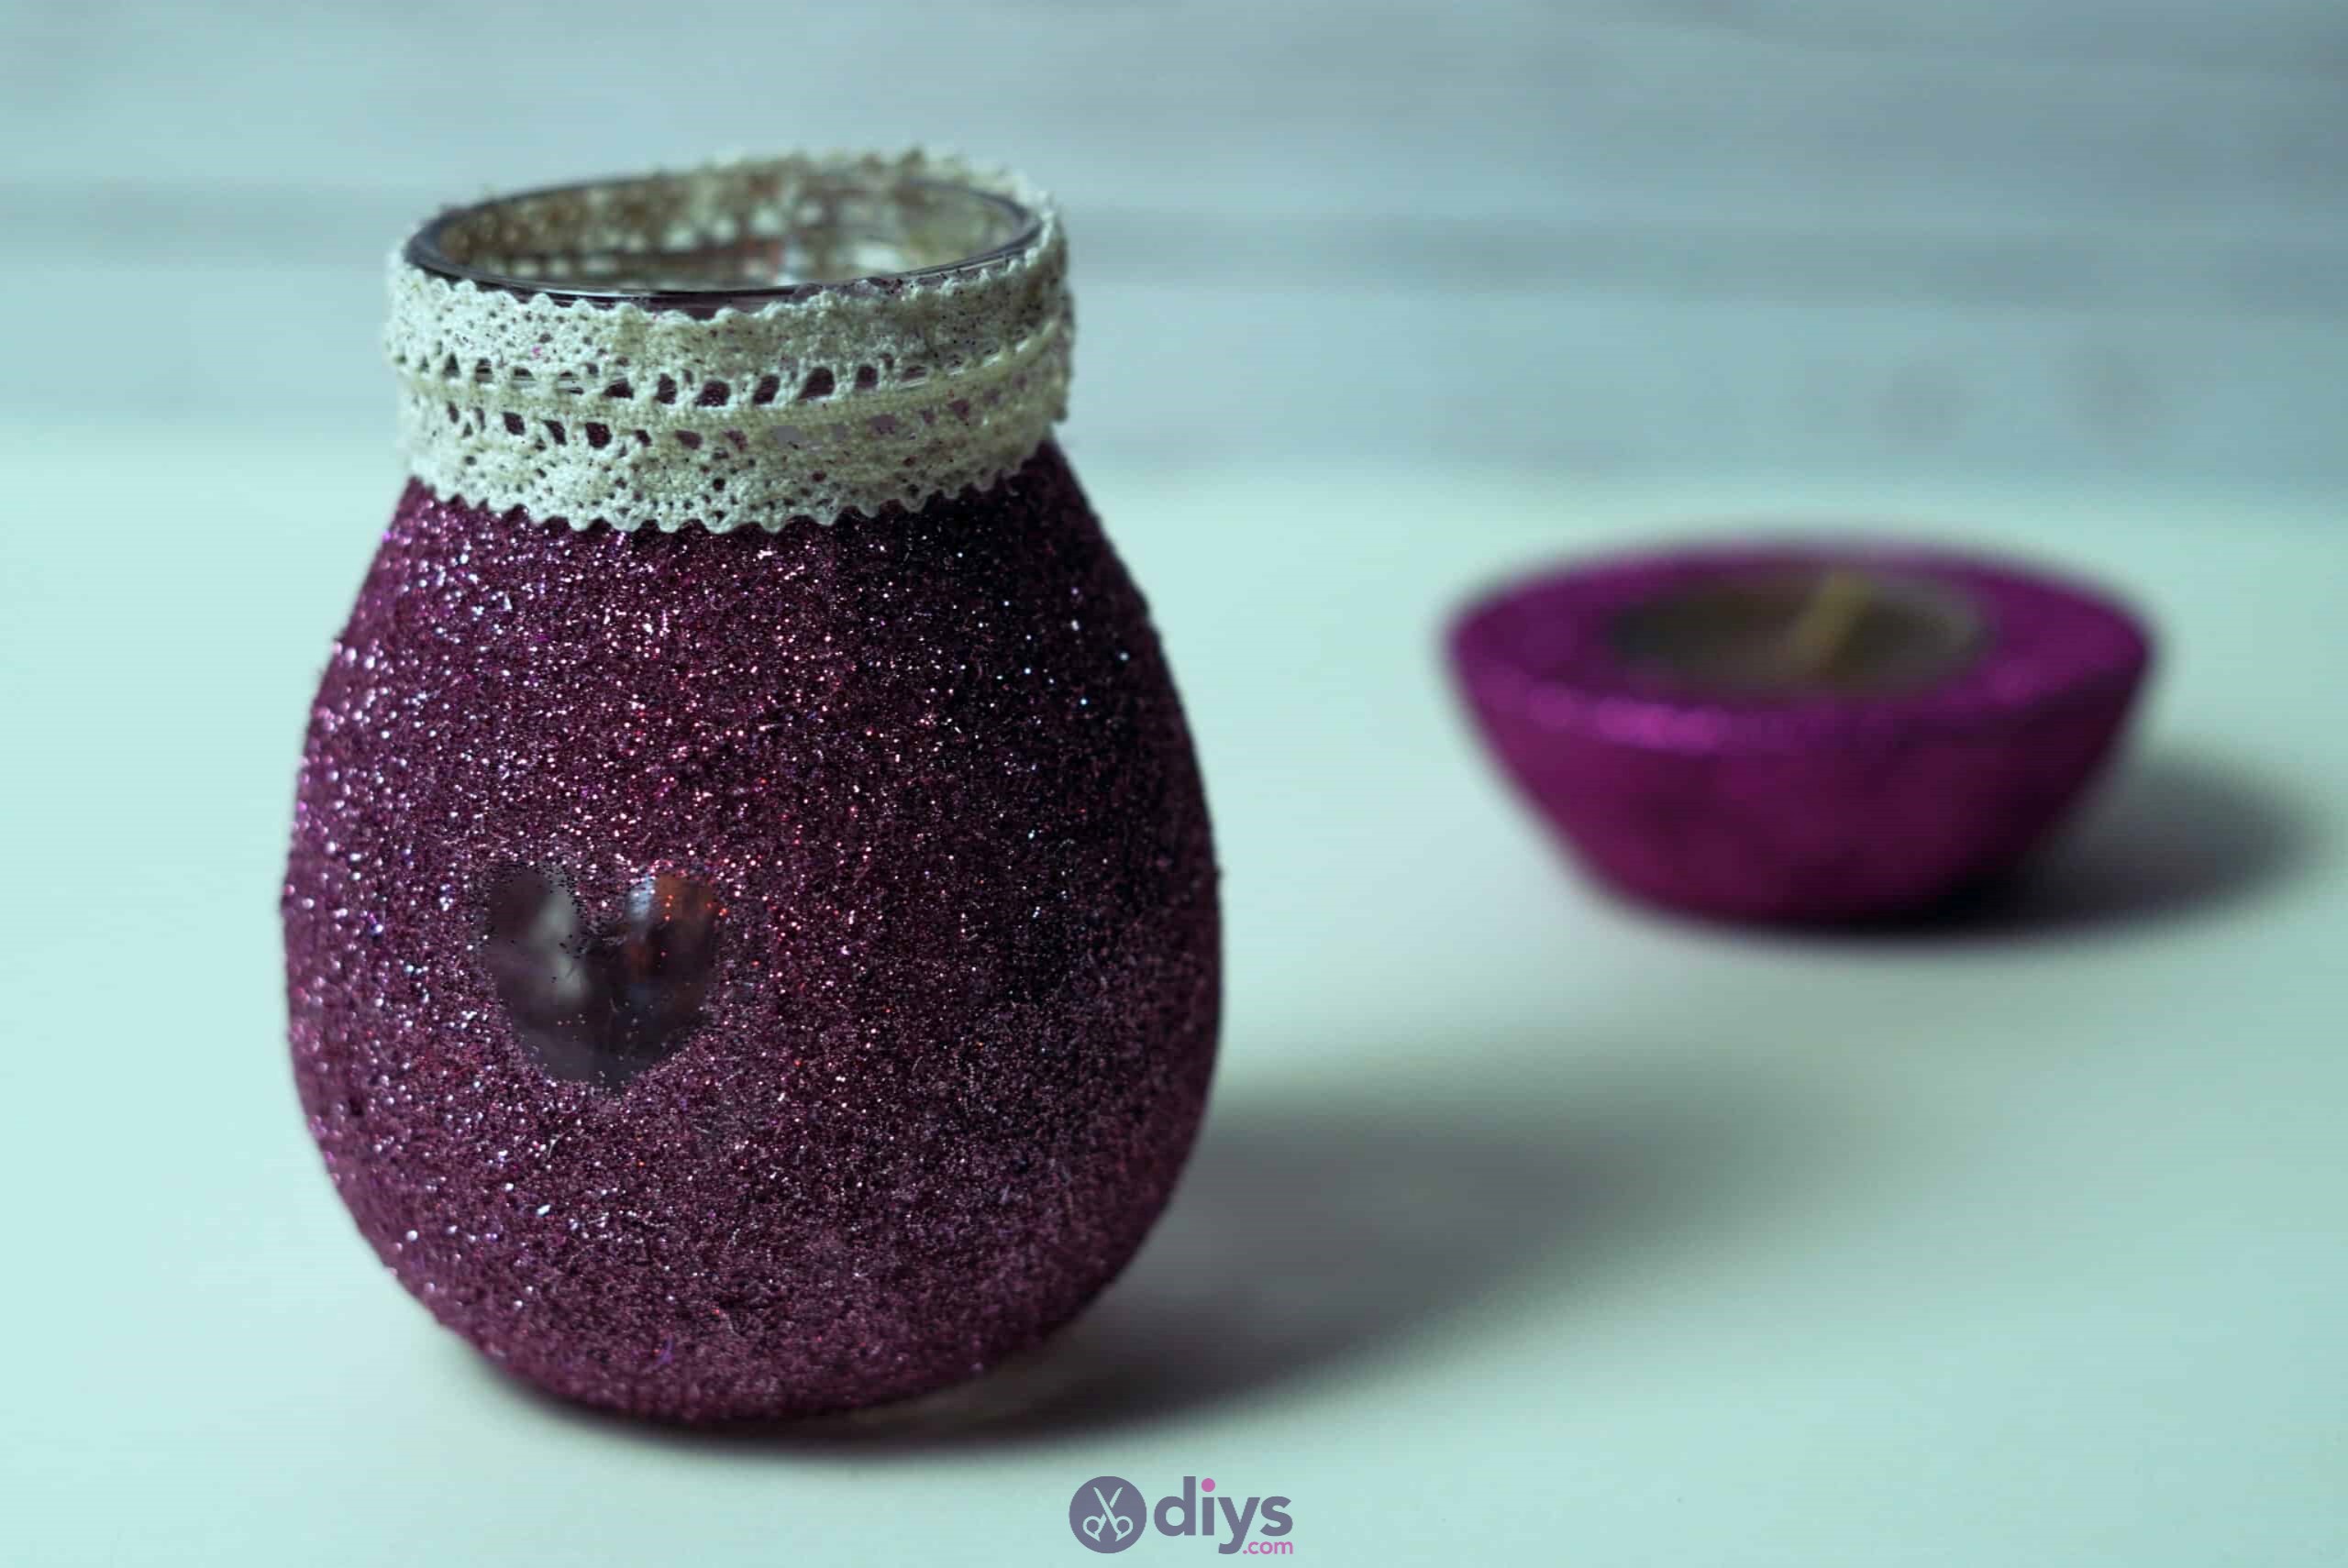 Diy flower glitter vase from glass jars project